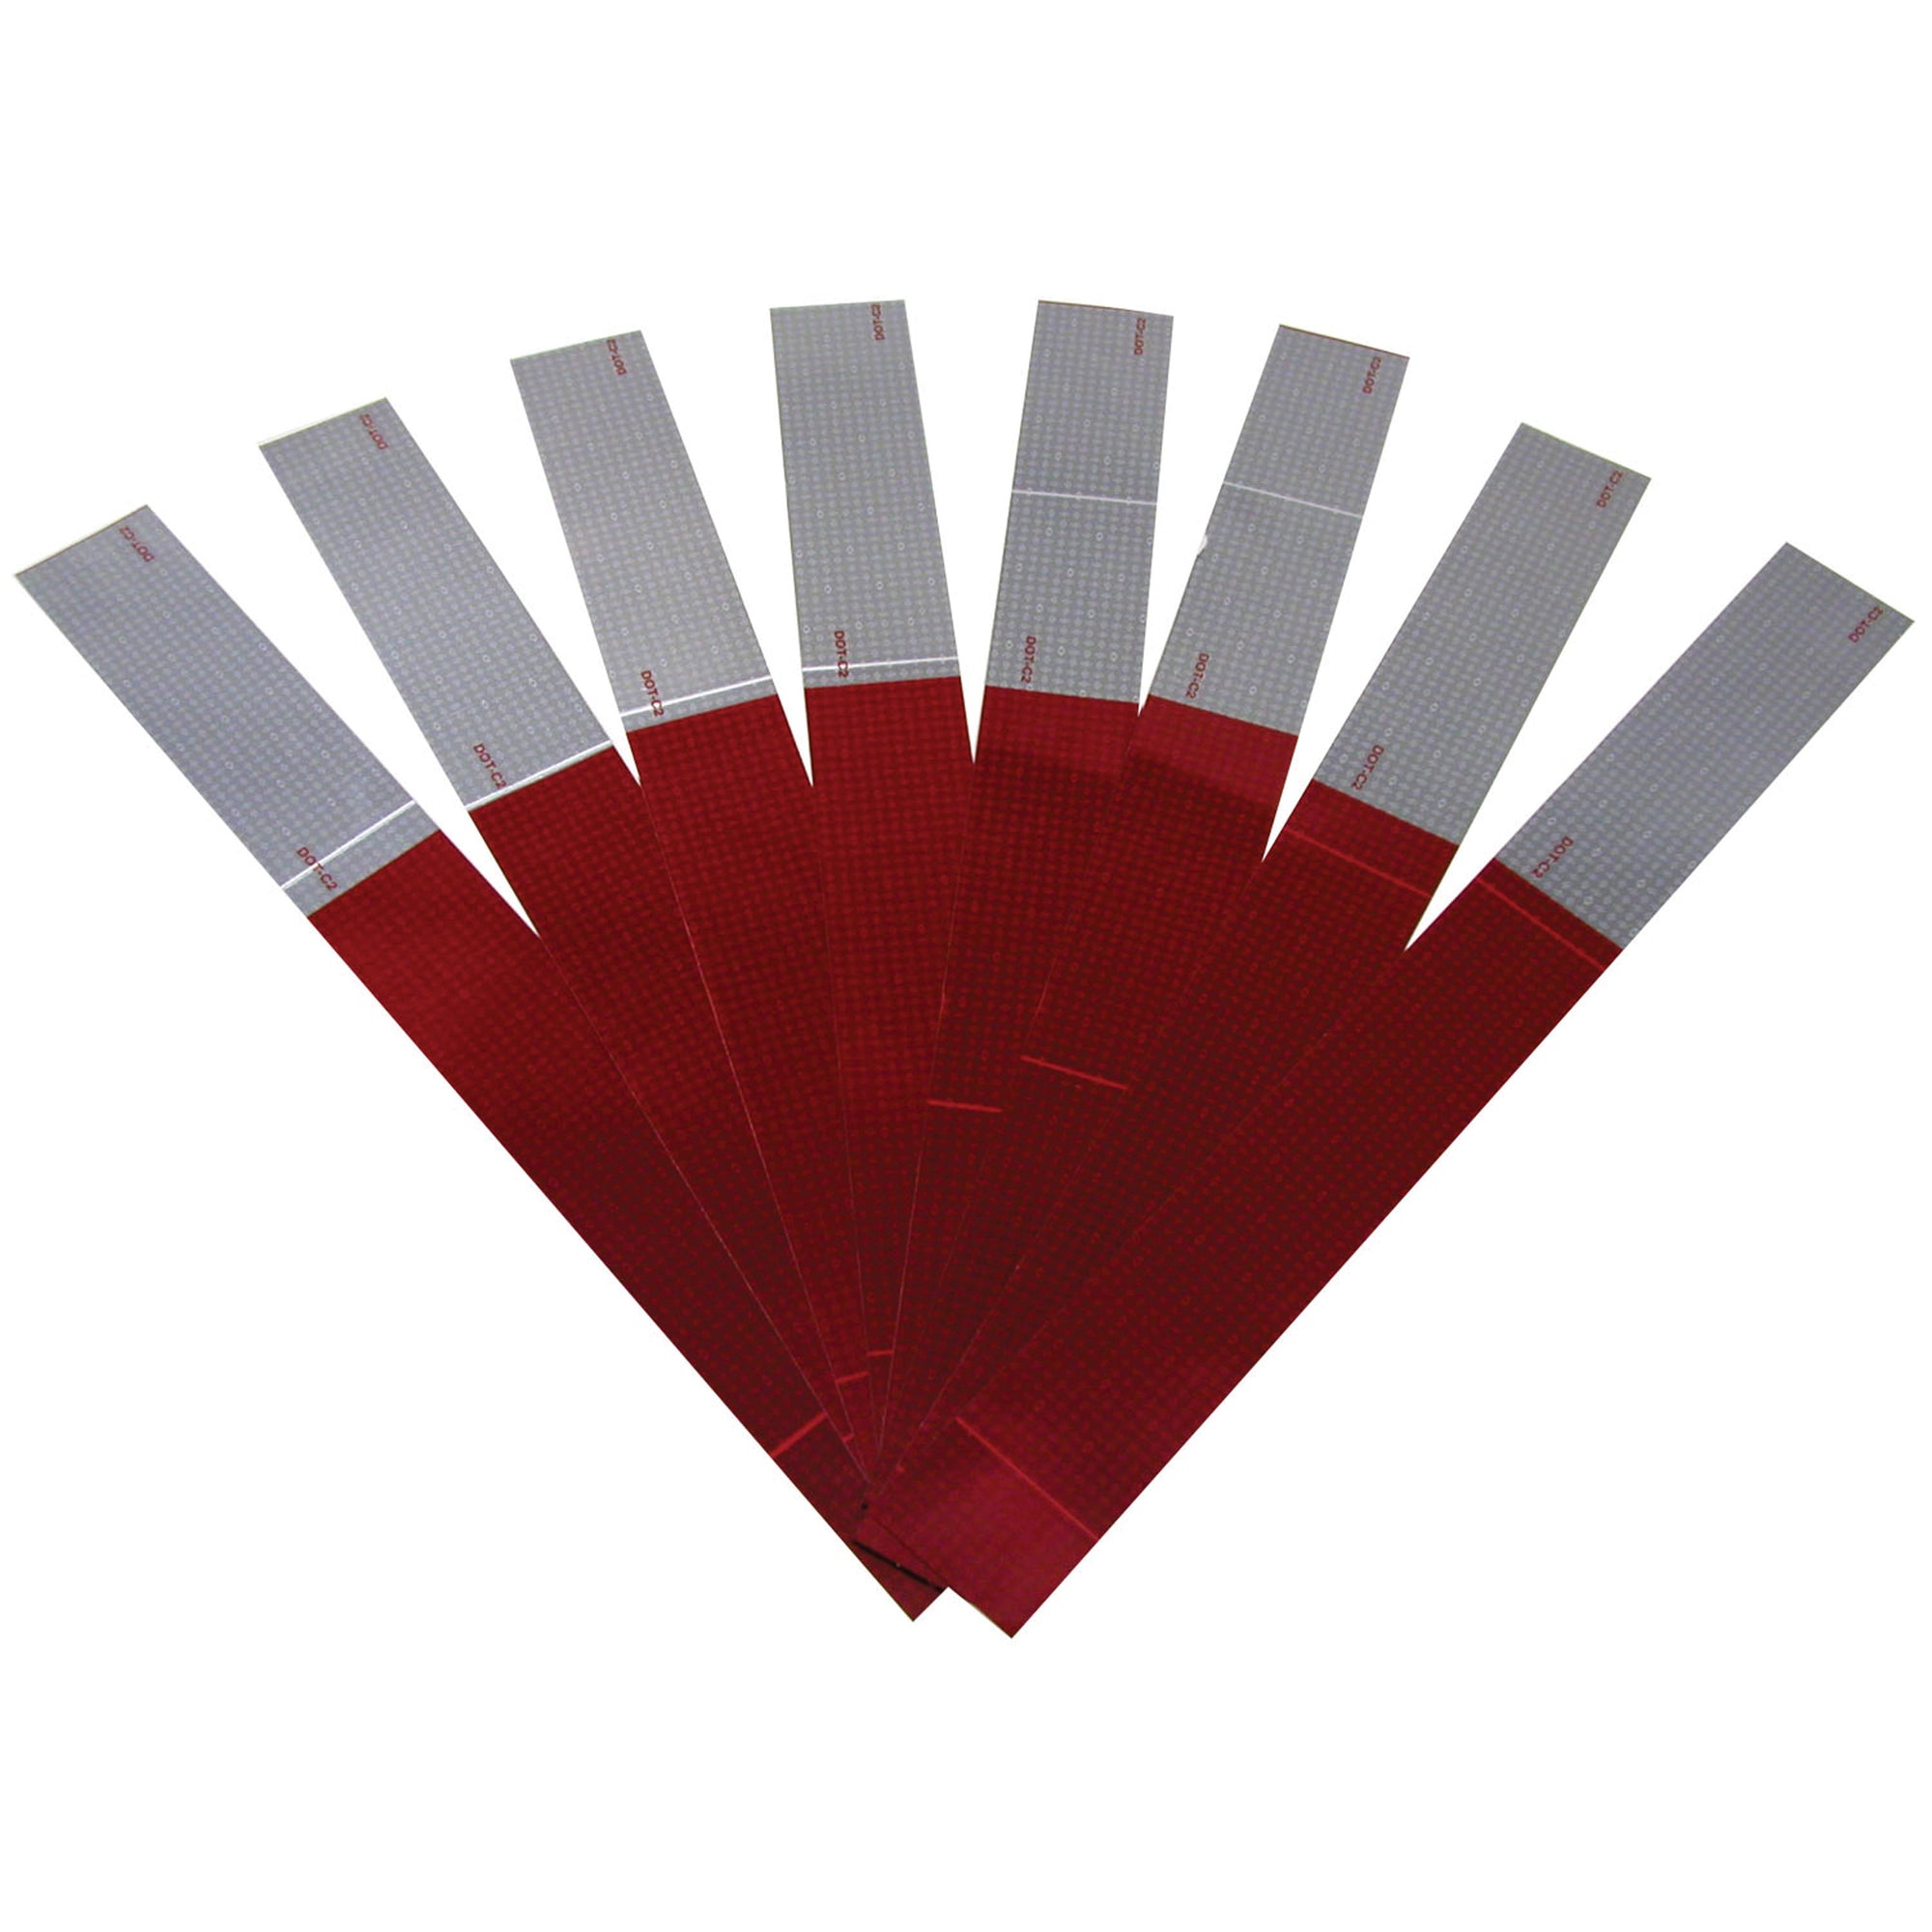 Peterson 465K Reflective Marking Tape Strip - 2" Red/White 8-Strip Kit